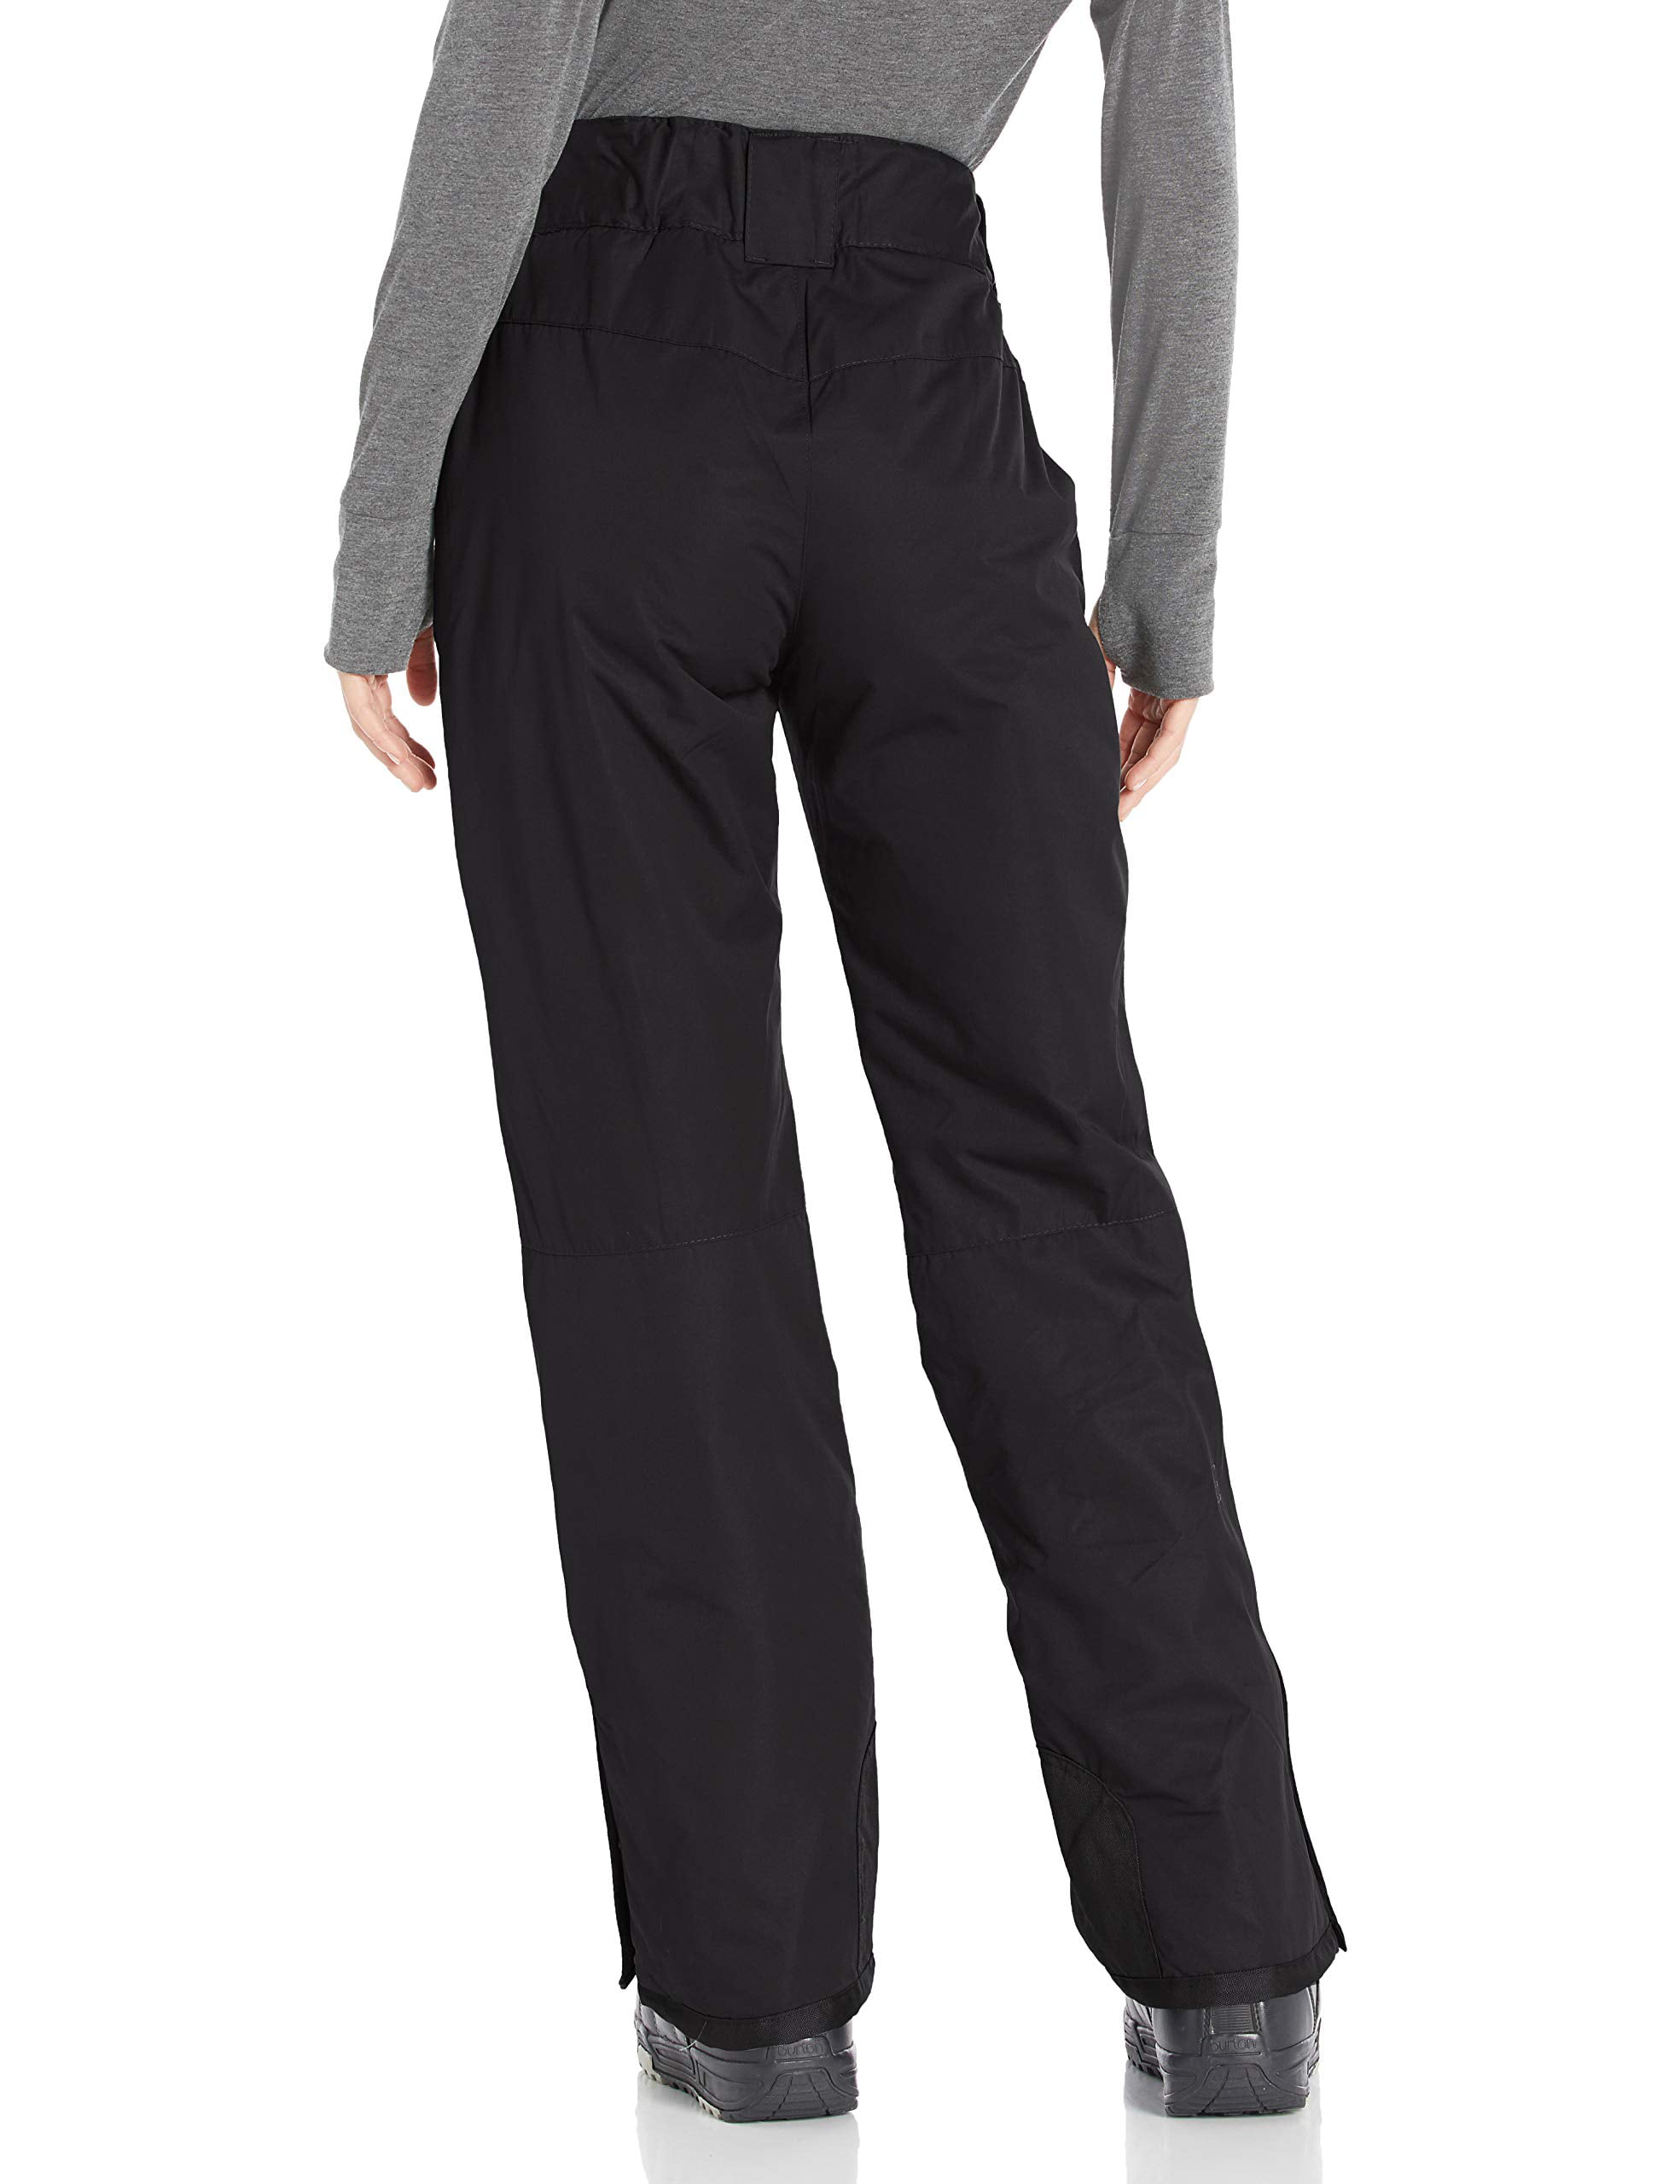 Arctic Women's Insulated Snow Pants, Black, 4X (28W-30W) Short